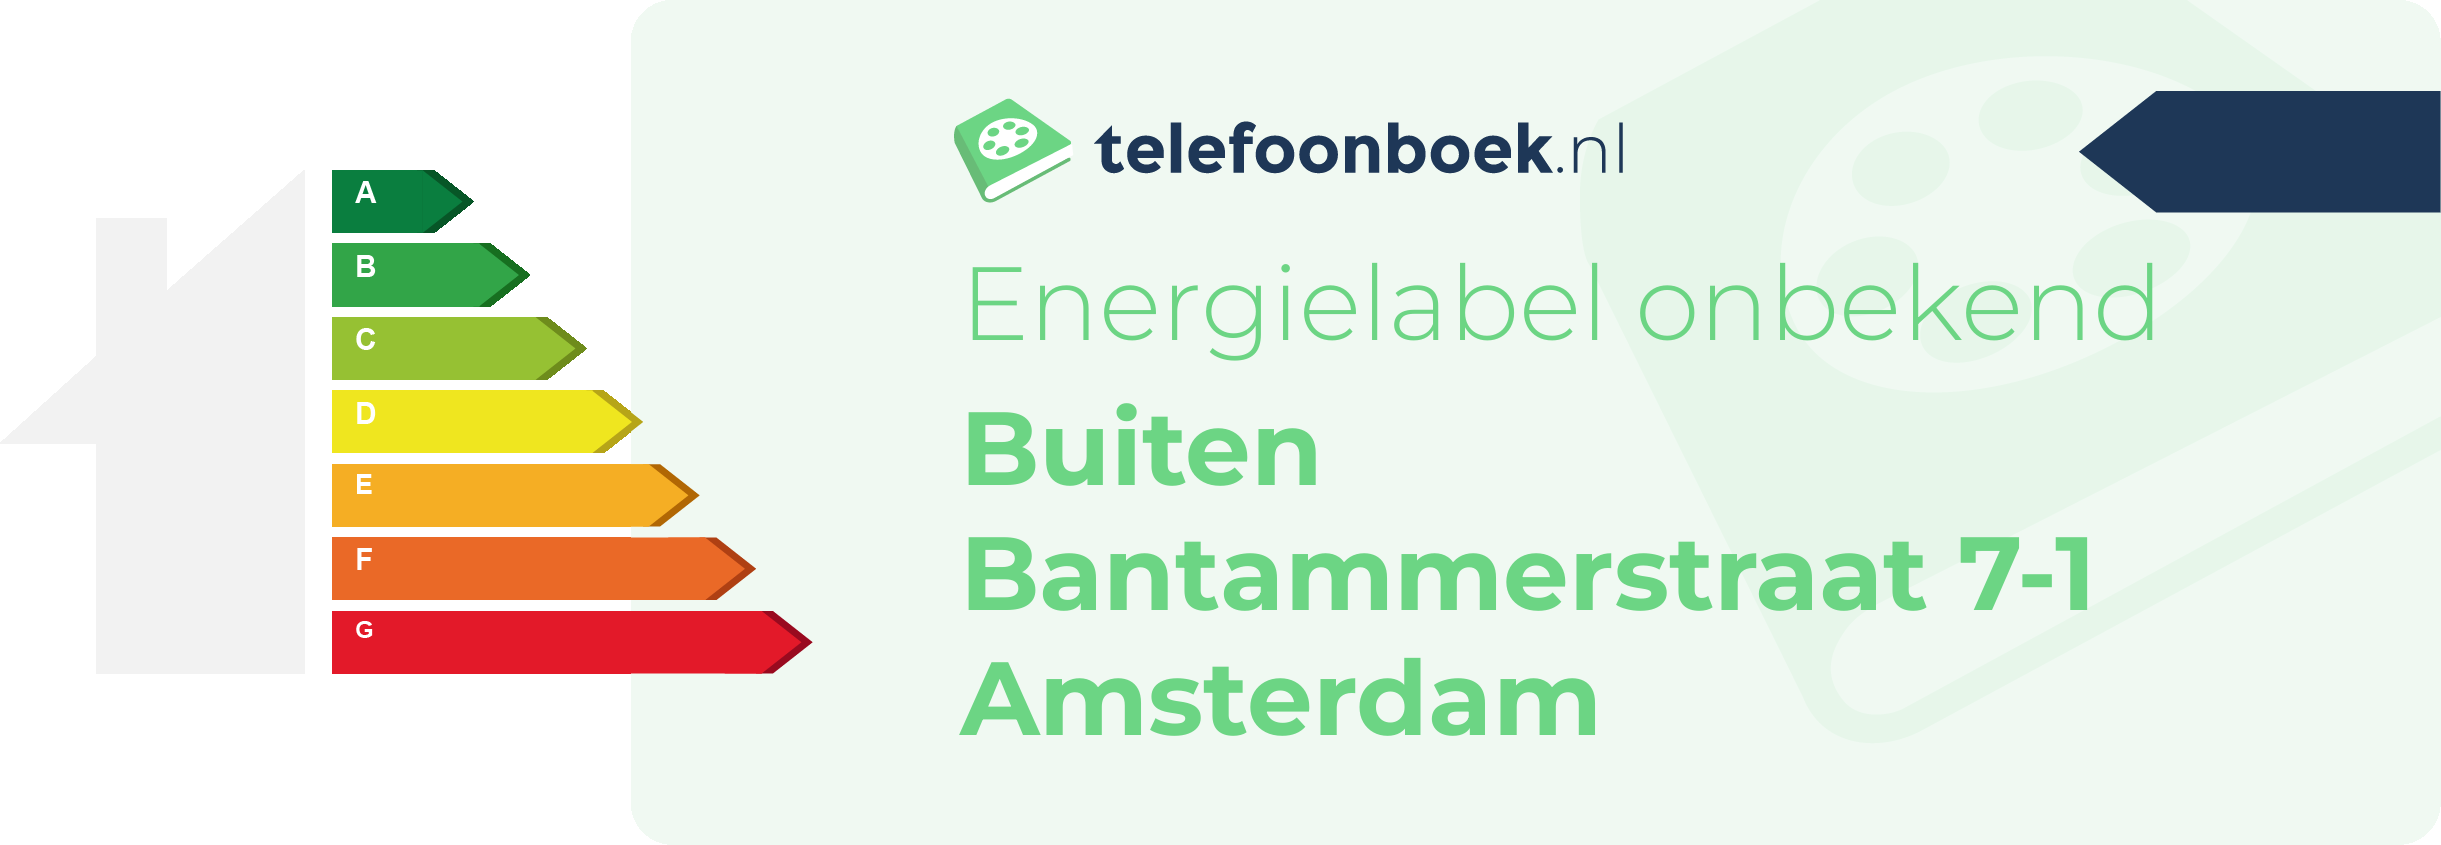 Energielabel Buiten Bantammerstraat 7-1 Amsterdam